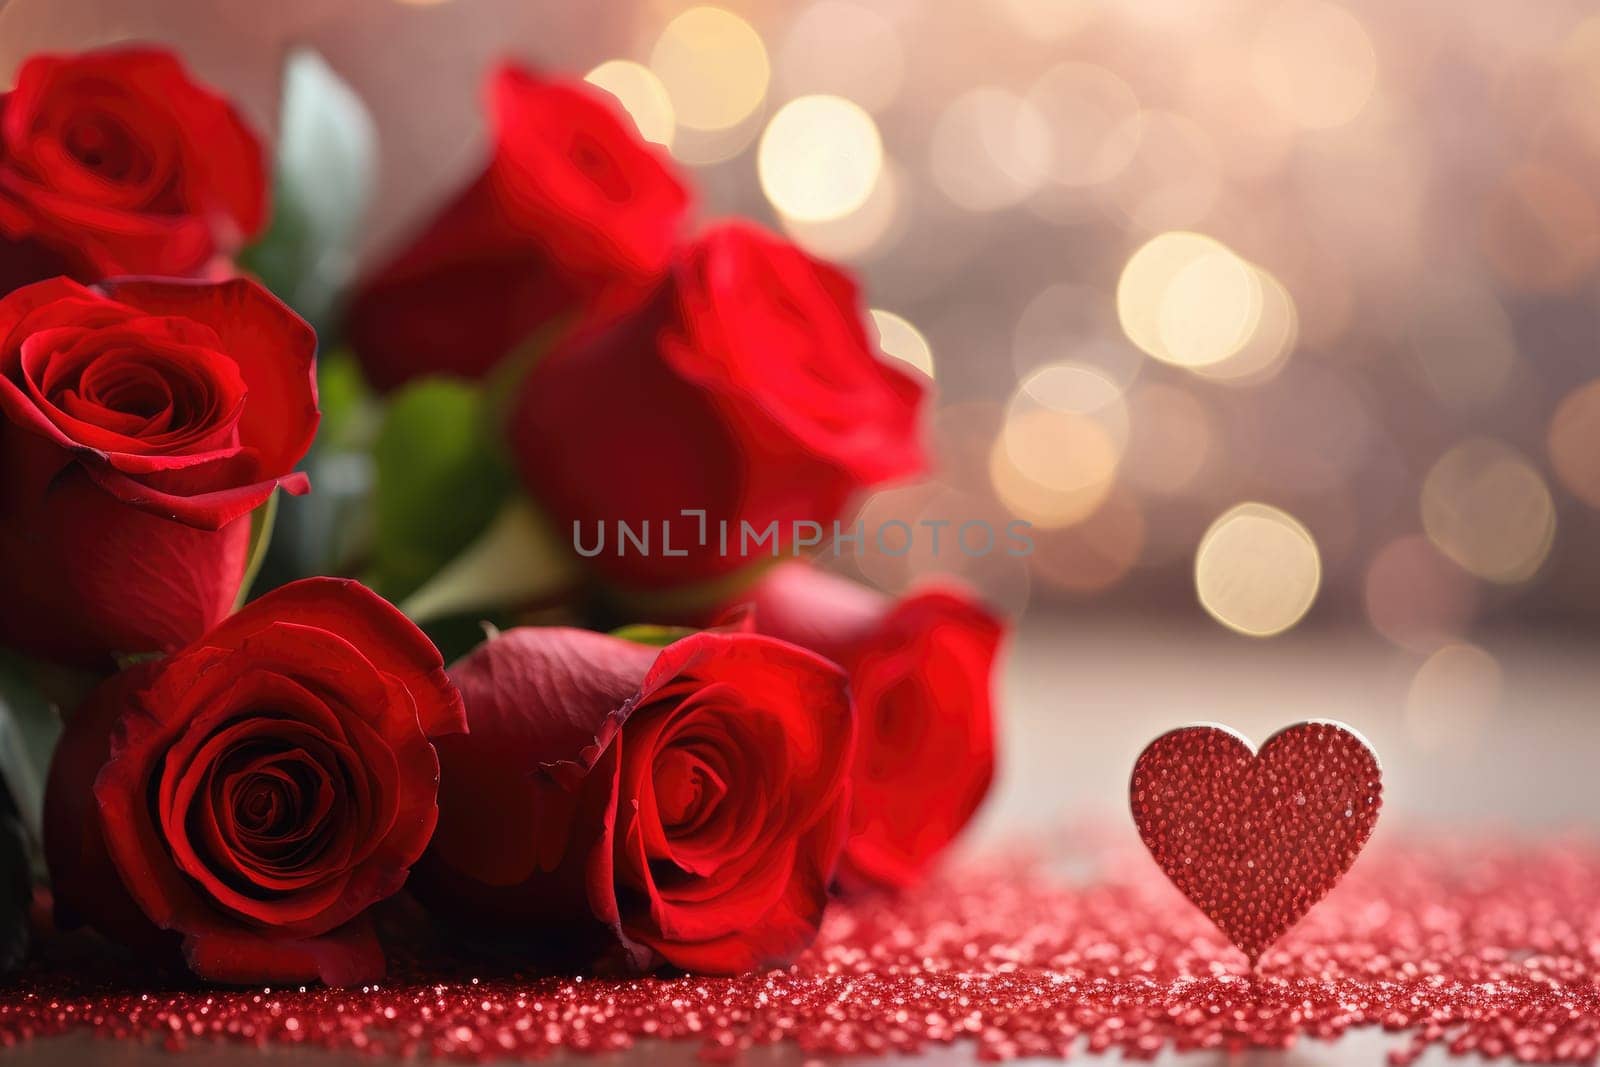 valentine's day celebration with red roses background by nijieimu